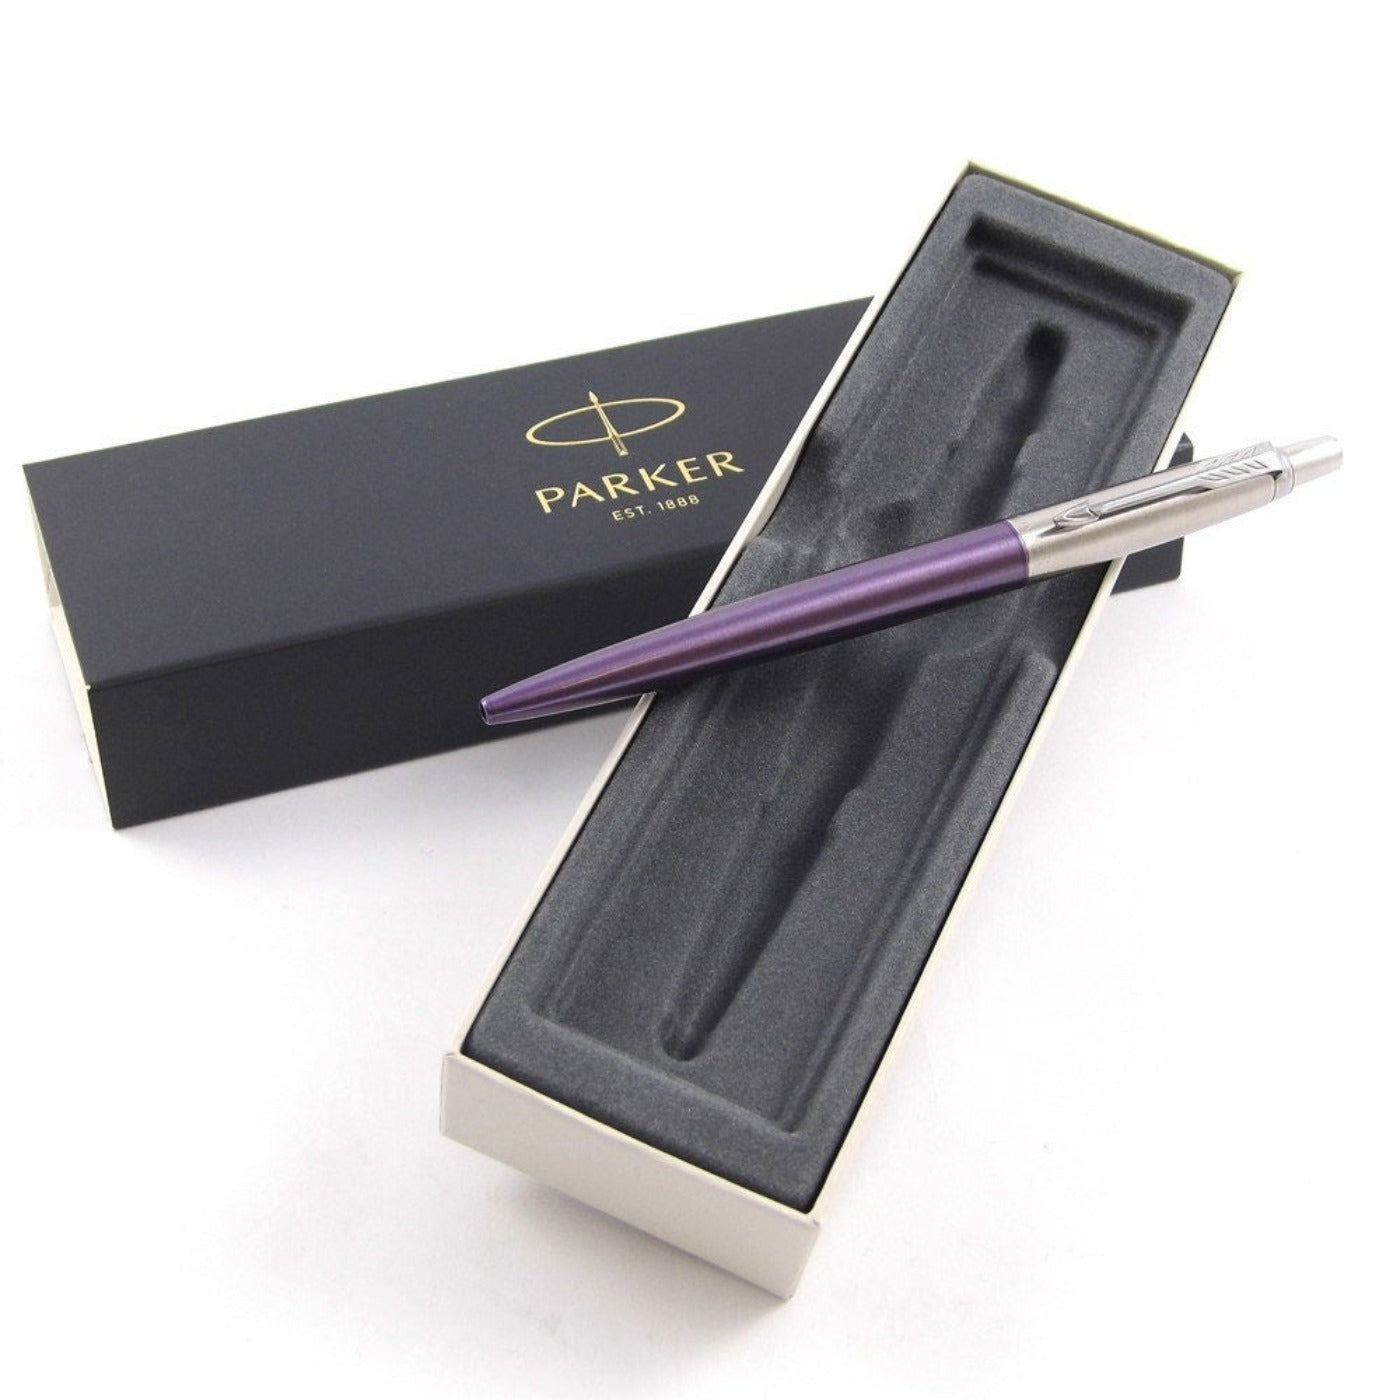 Personalised, Engraved Pen - Parker Victoria Violet Jotter Pen